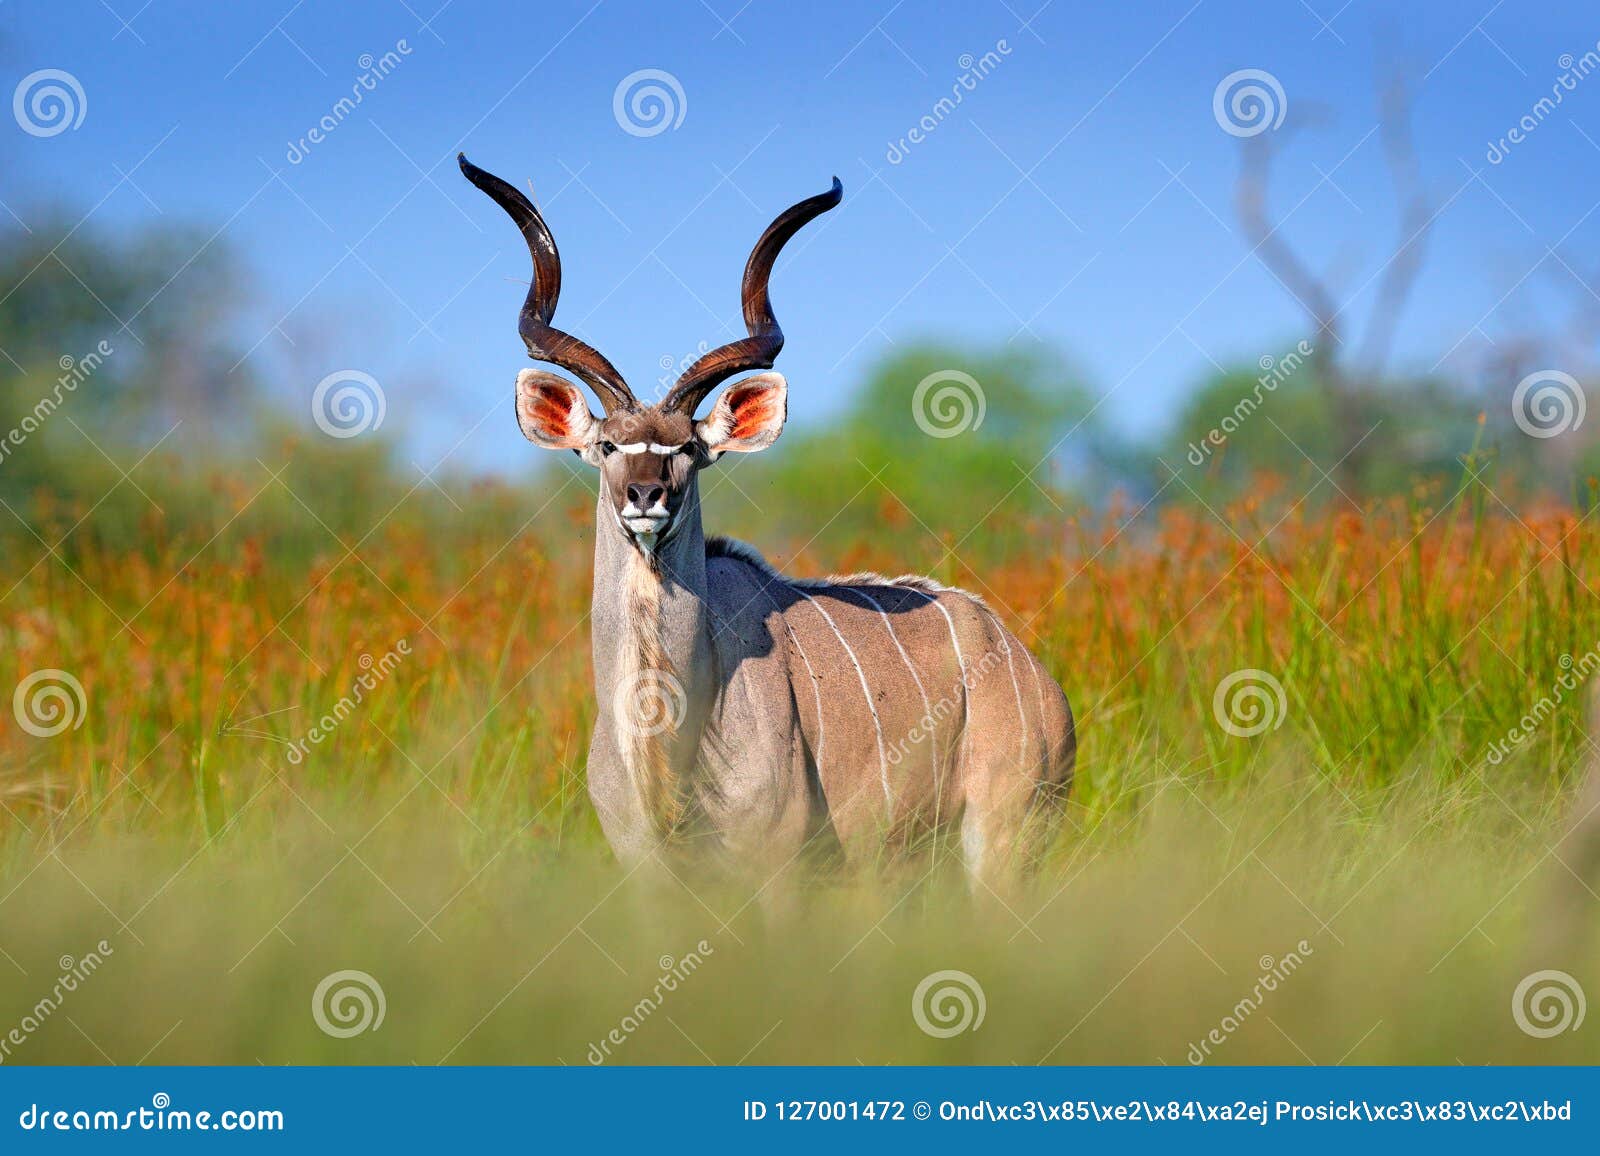 greater kudu, tragelaphus strepsiceros, handsome antelope with spiral horns. animal in the green meadow habitat, okavango delta,